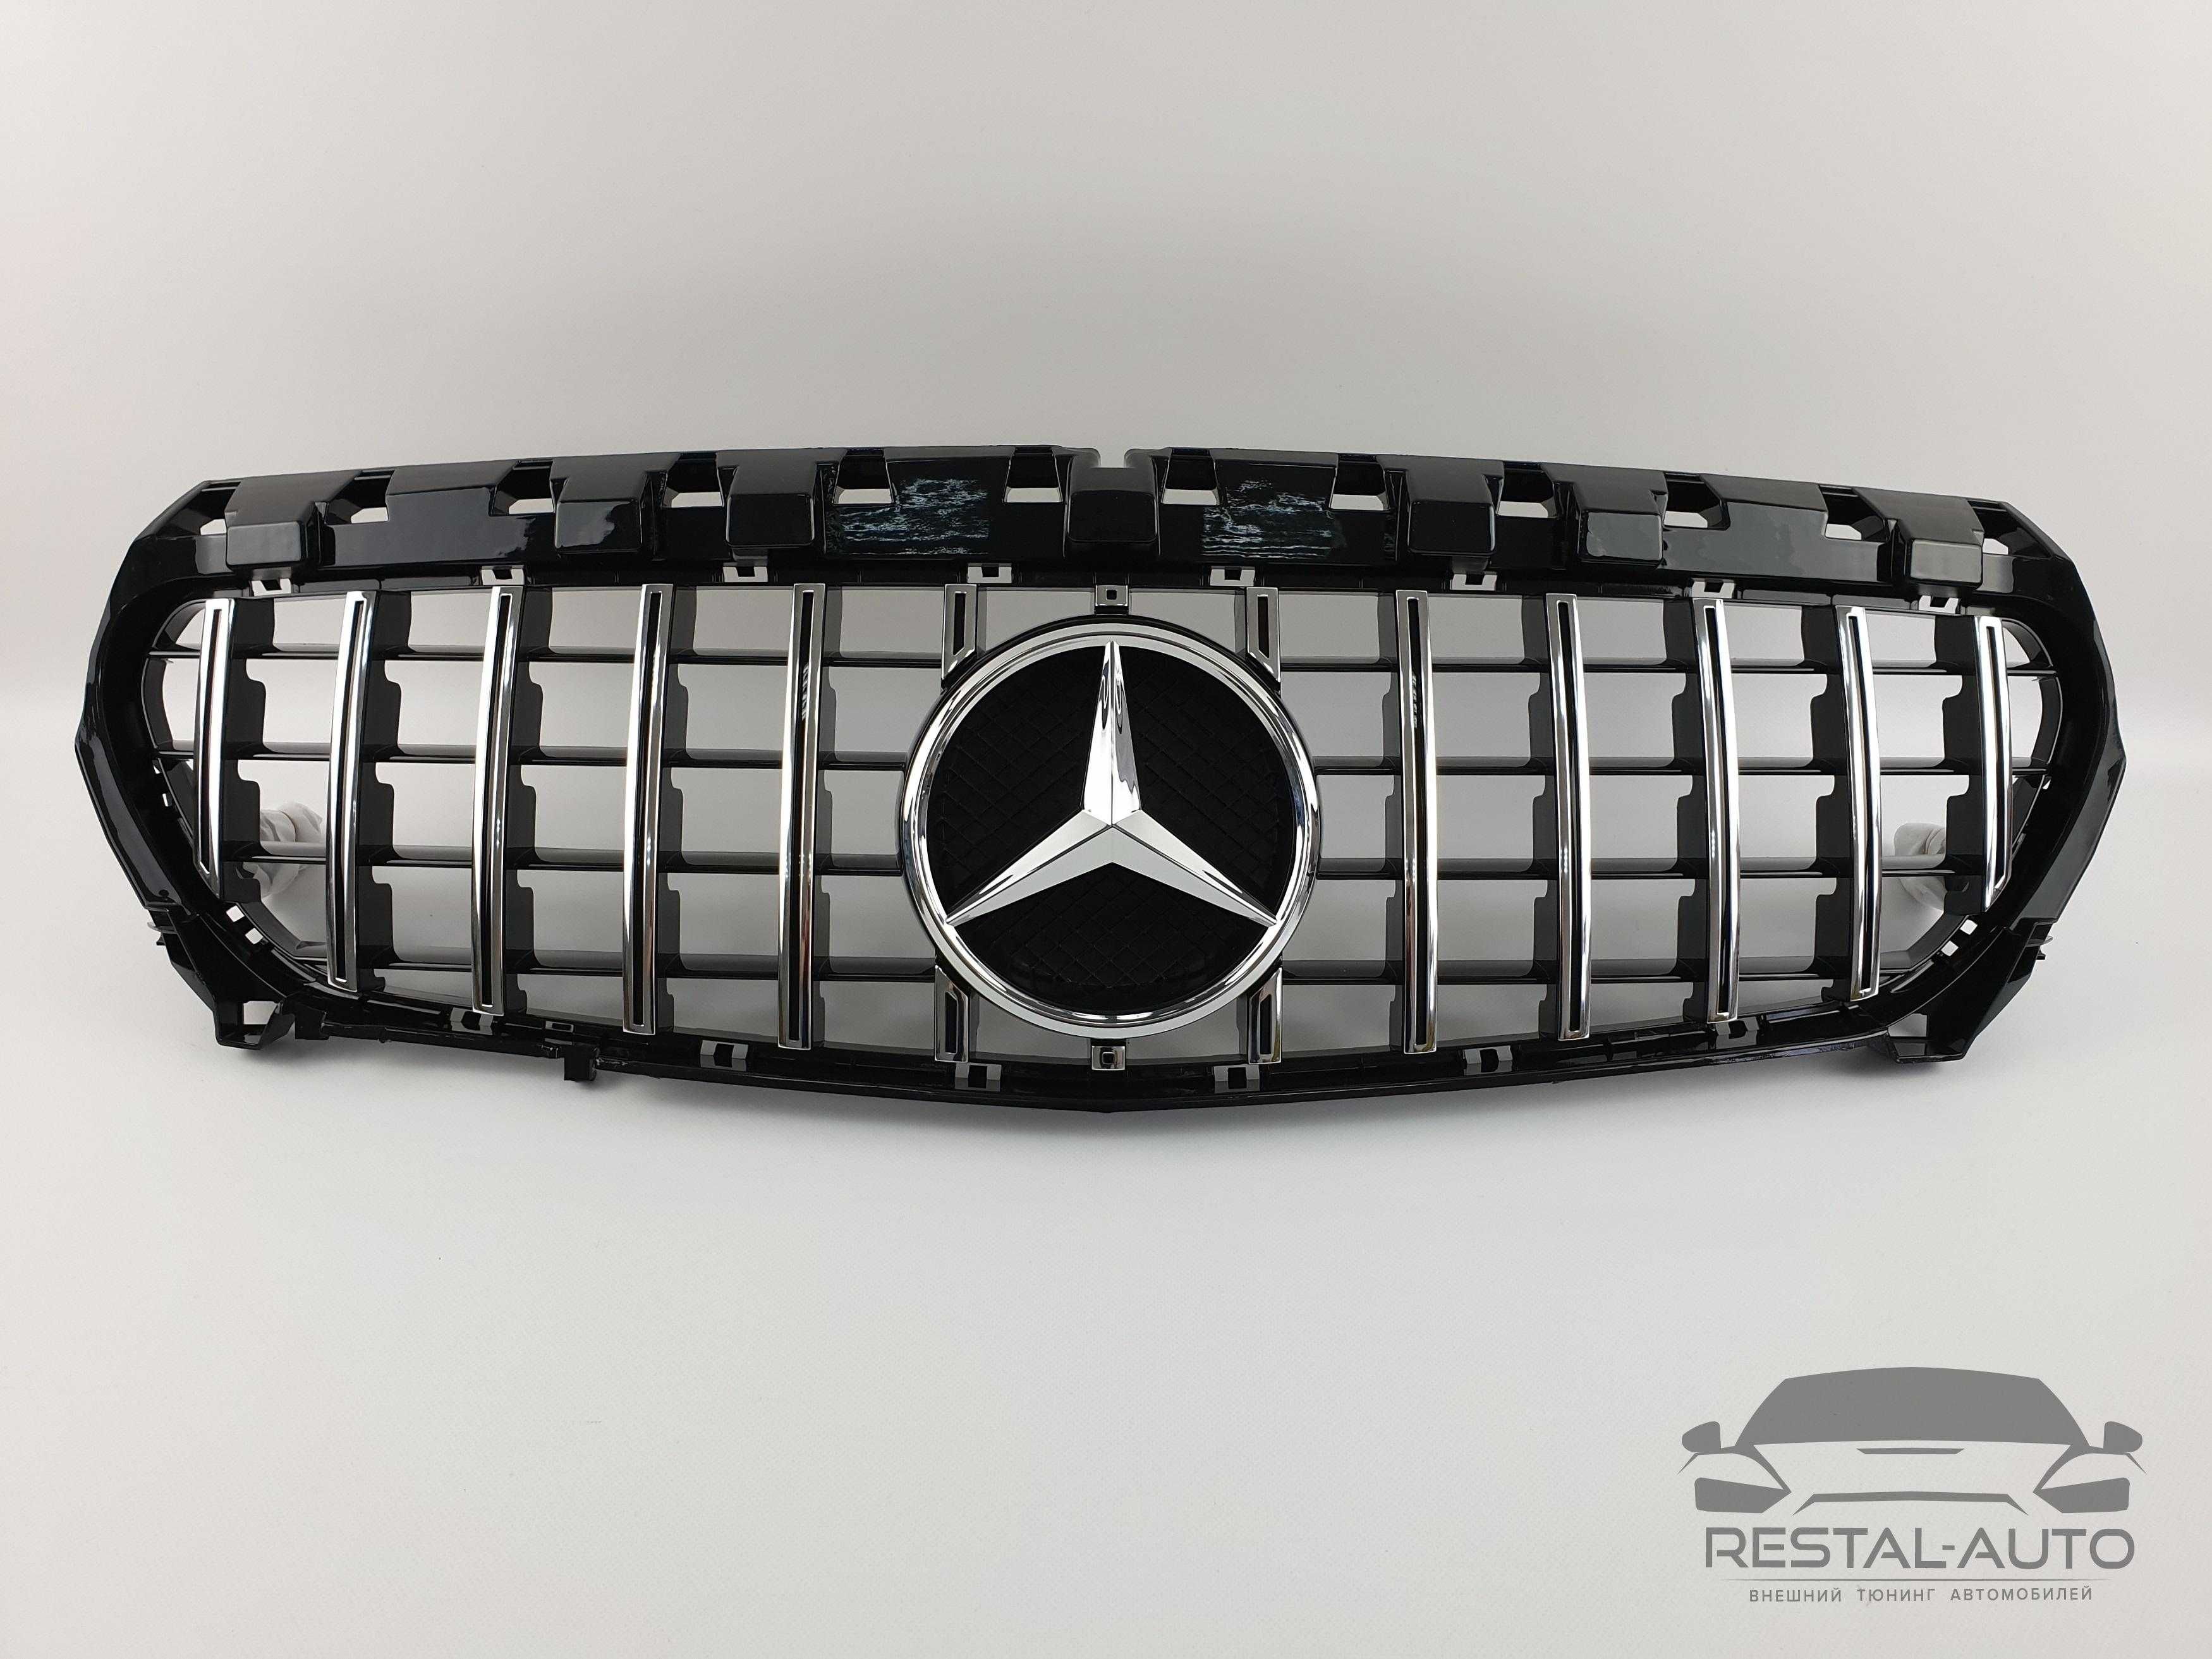 Решетка радиатора Mercedes CLA-Class C117 2013-17год (GT Chrome Black)